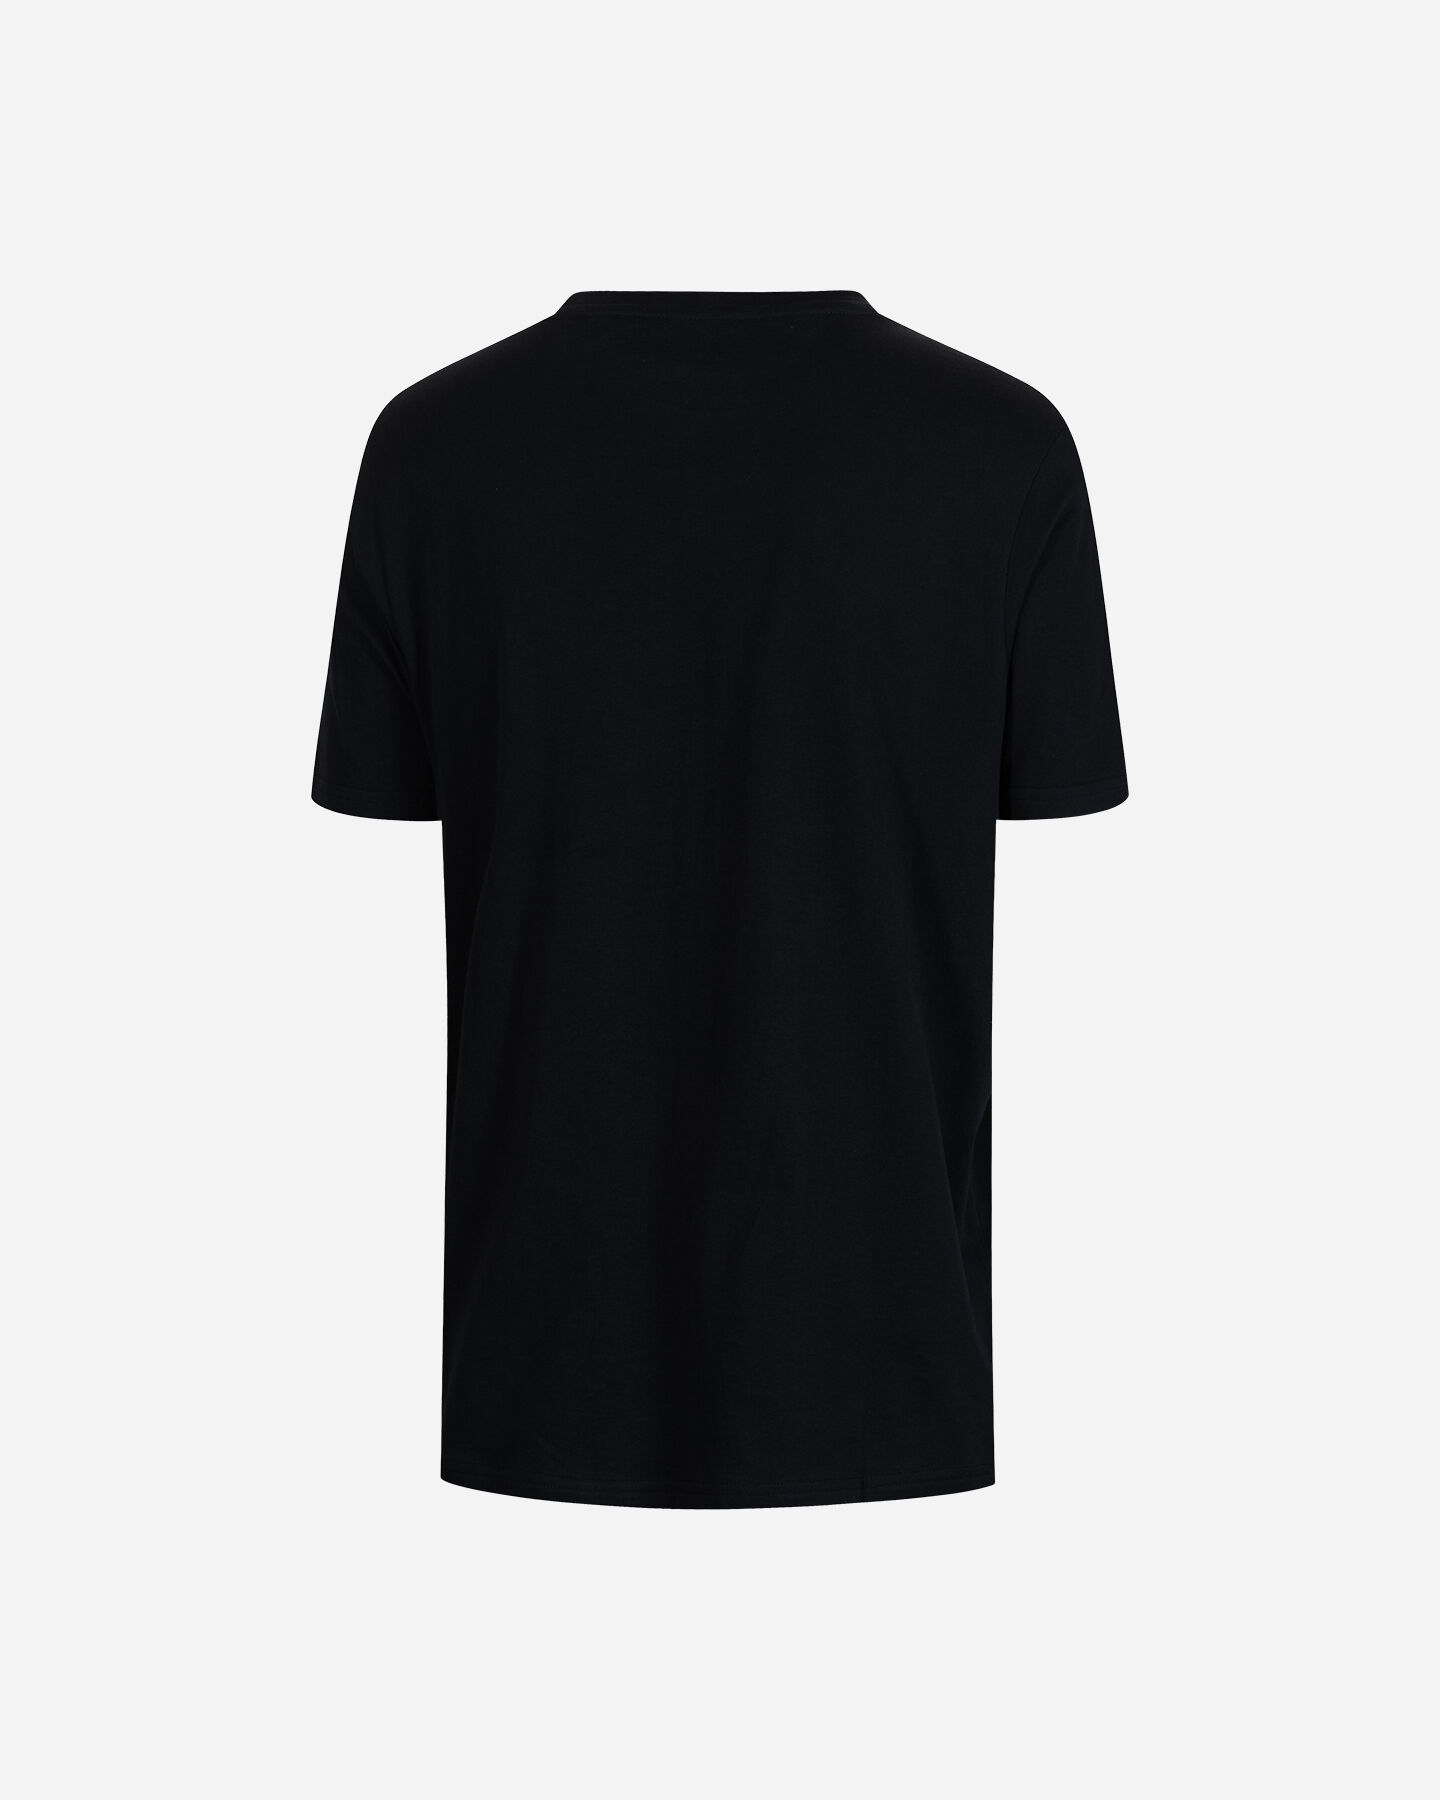  T-Shirt BEAR STREETWEAR URBAN STYLE M S4126729|050|S scatto 1